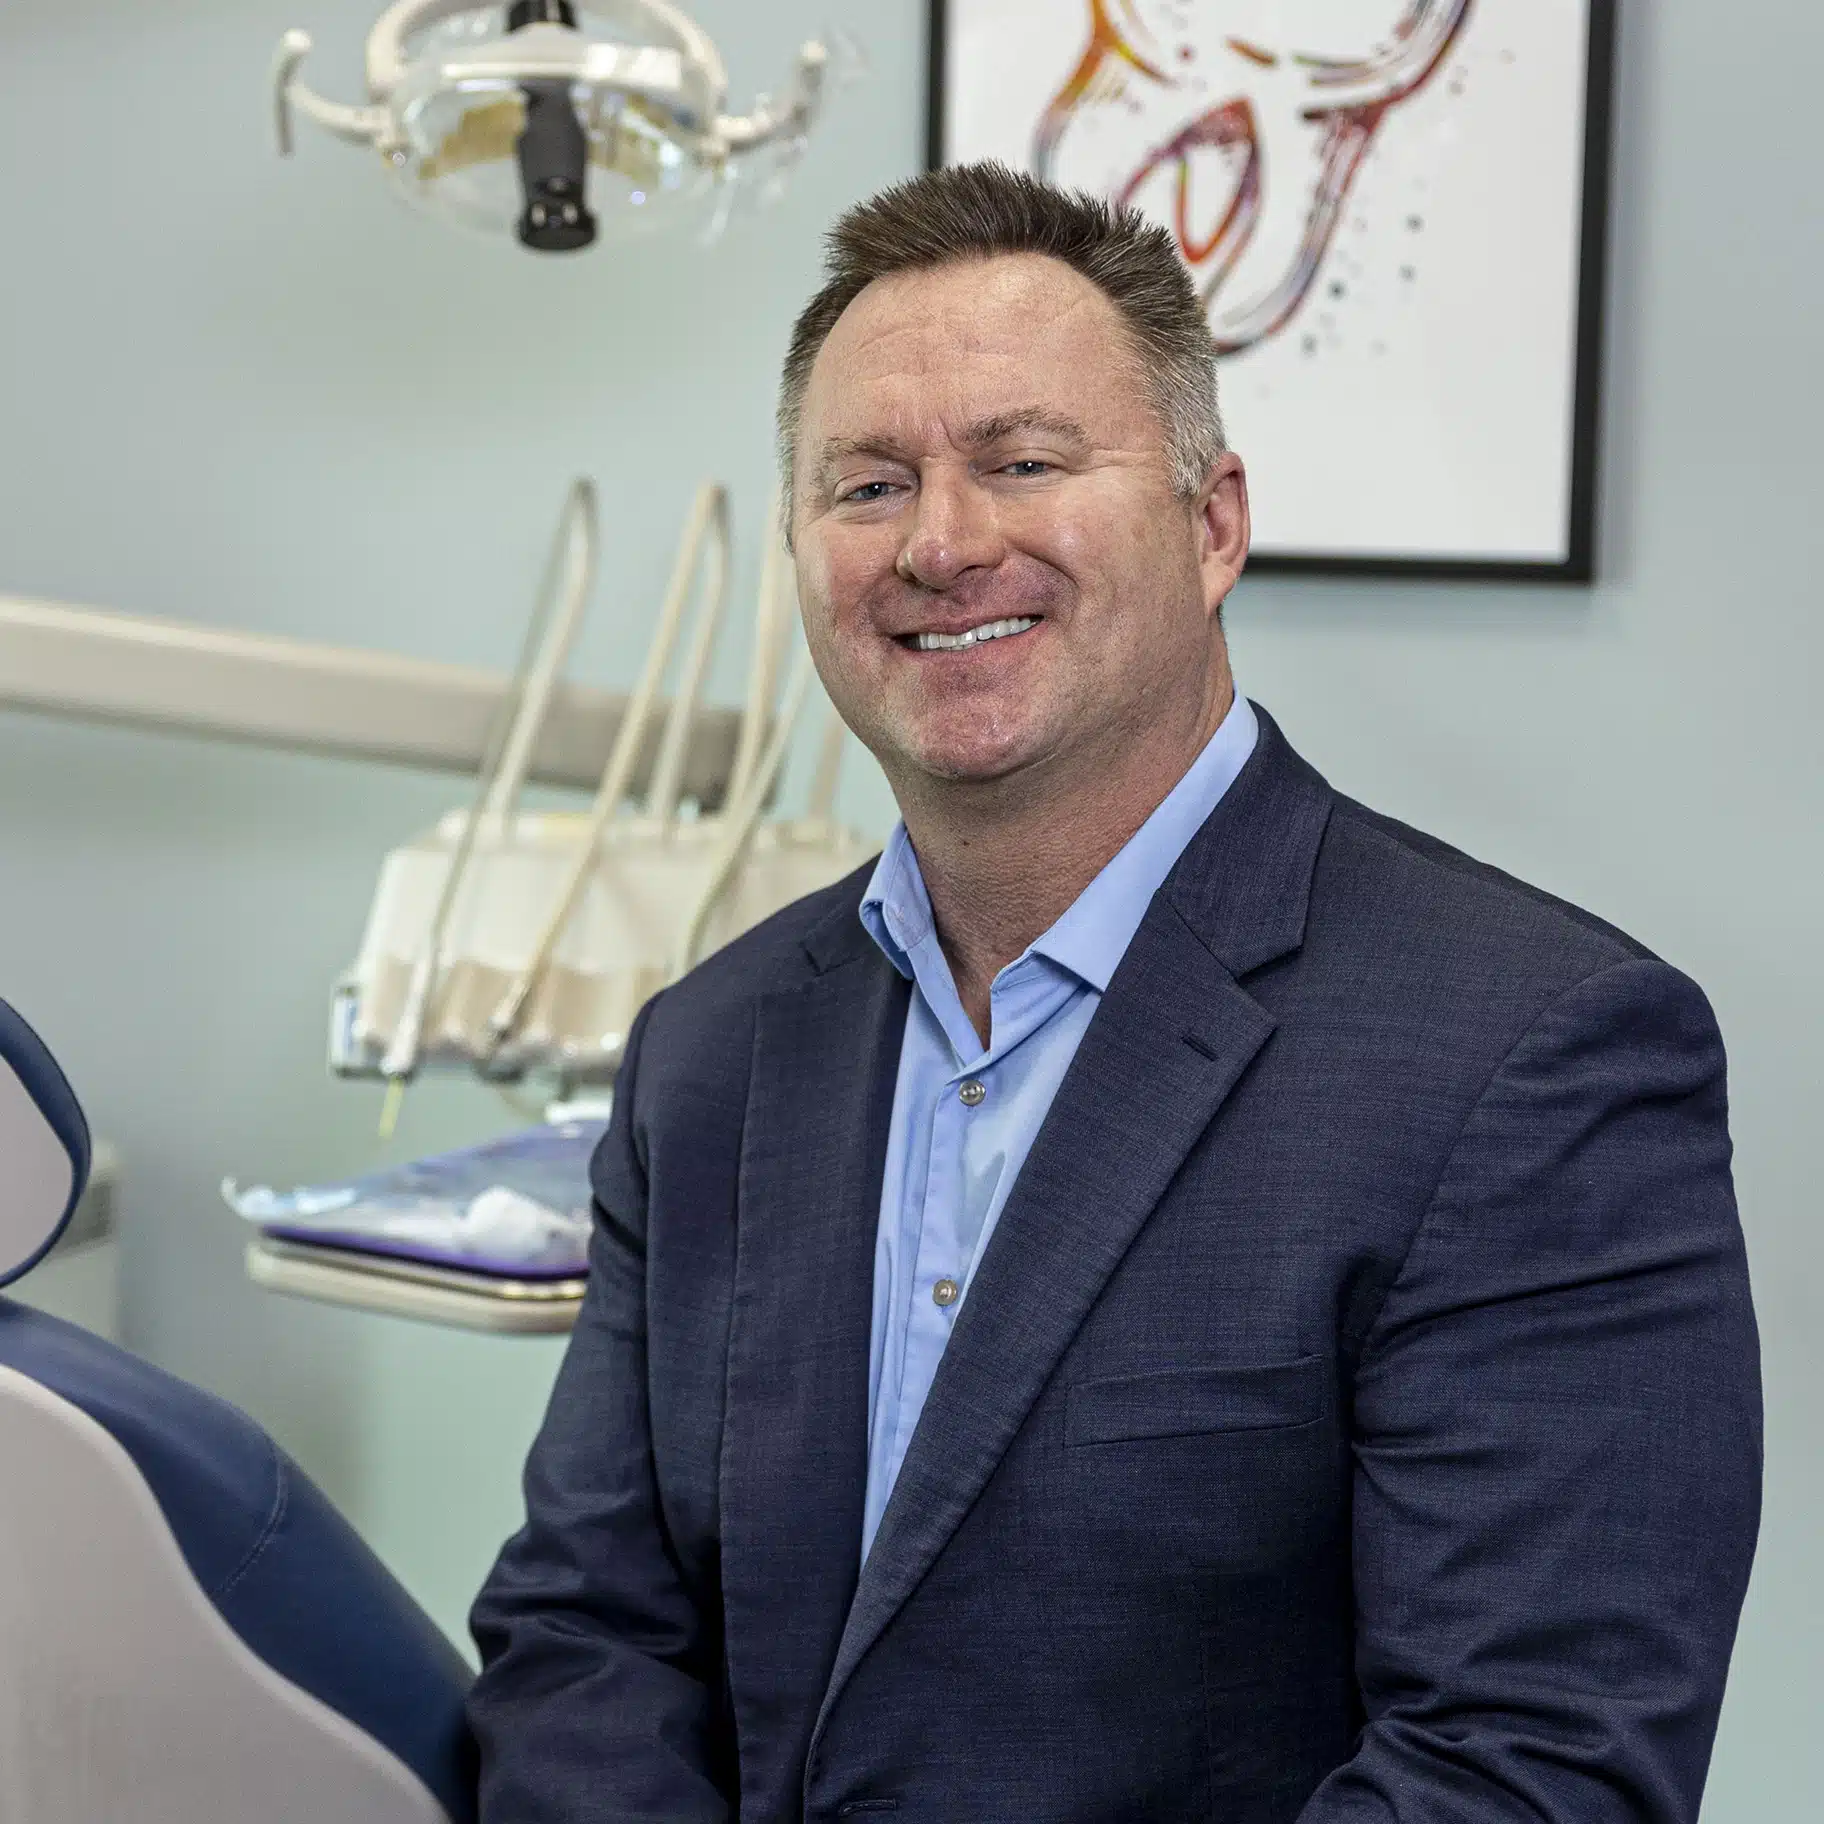 Dr. Peter Drews at Drews Dental Services in Lewiston, Maine